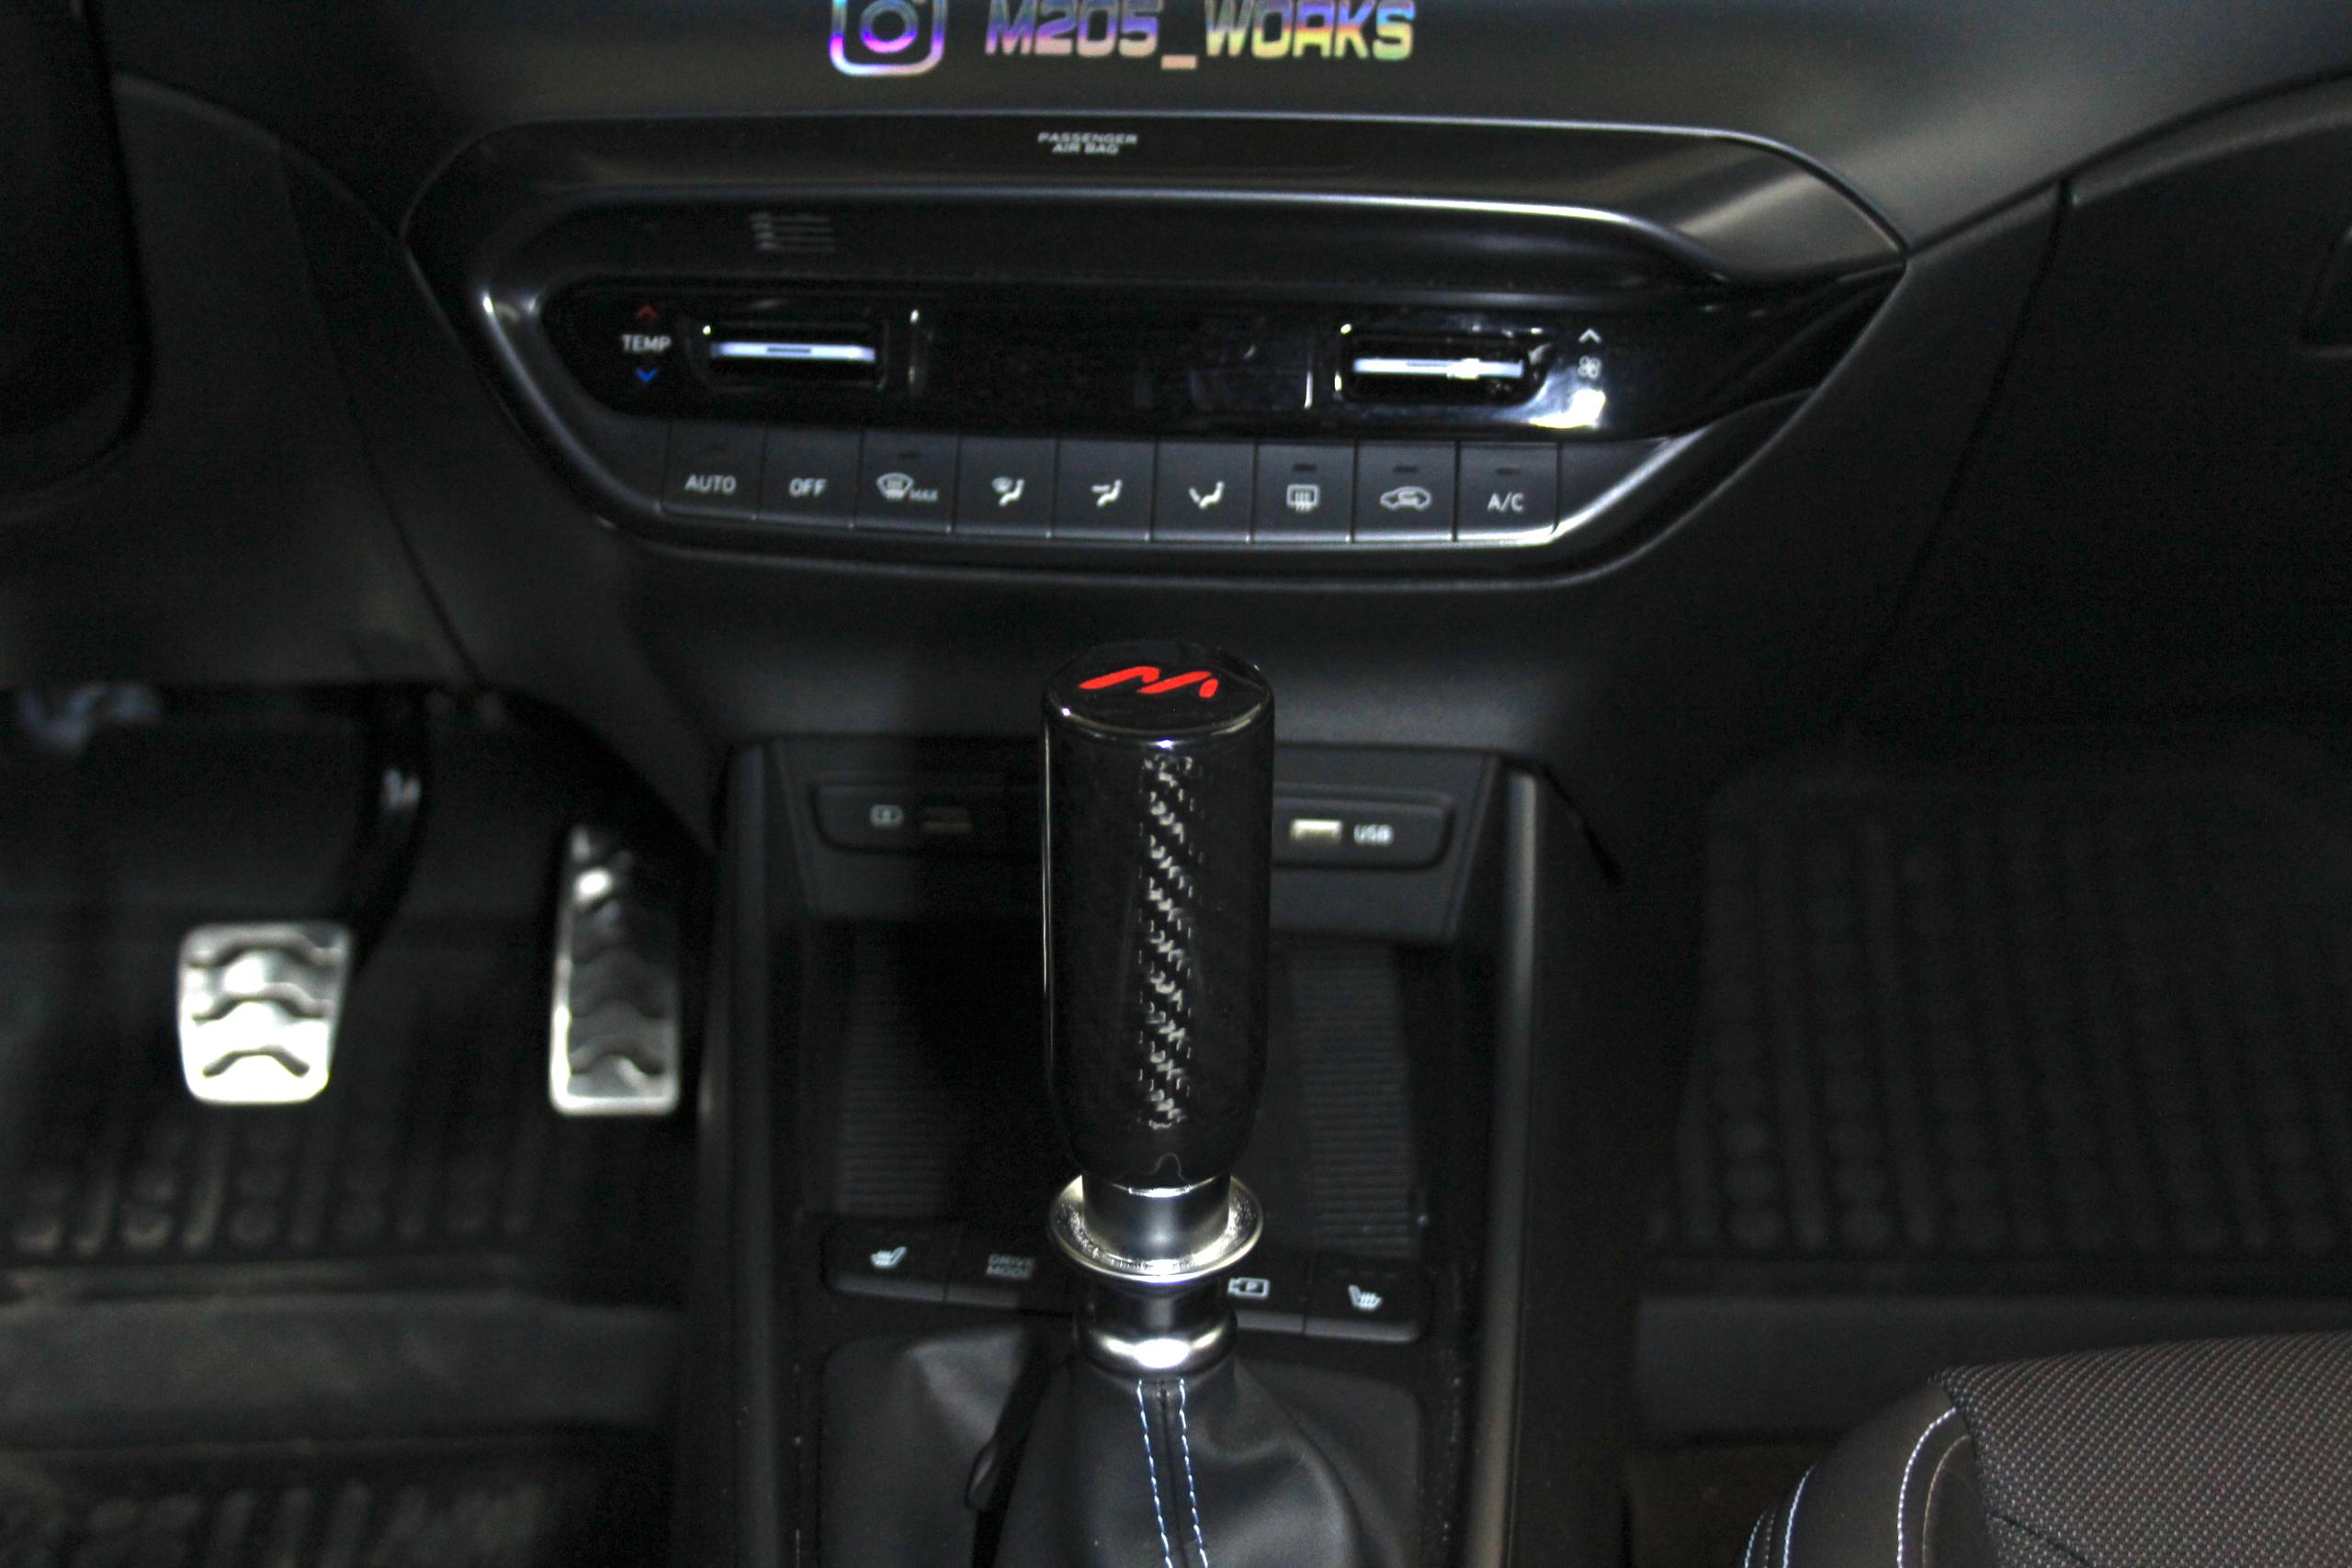 Hyundai i20 N - Carbon Fiber Knobs - M205 Works